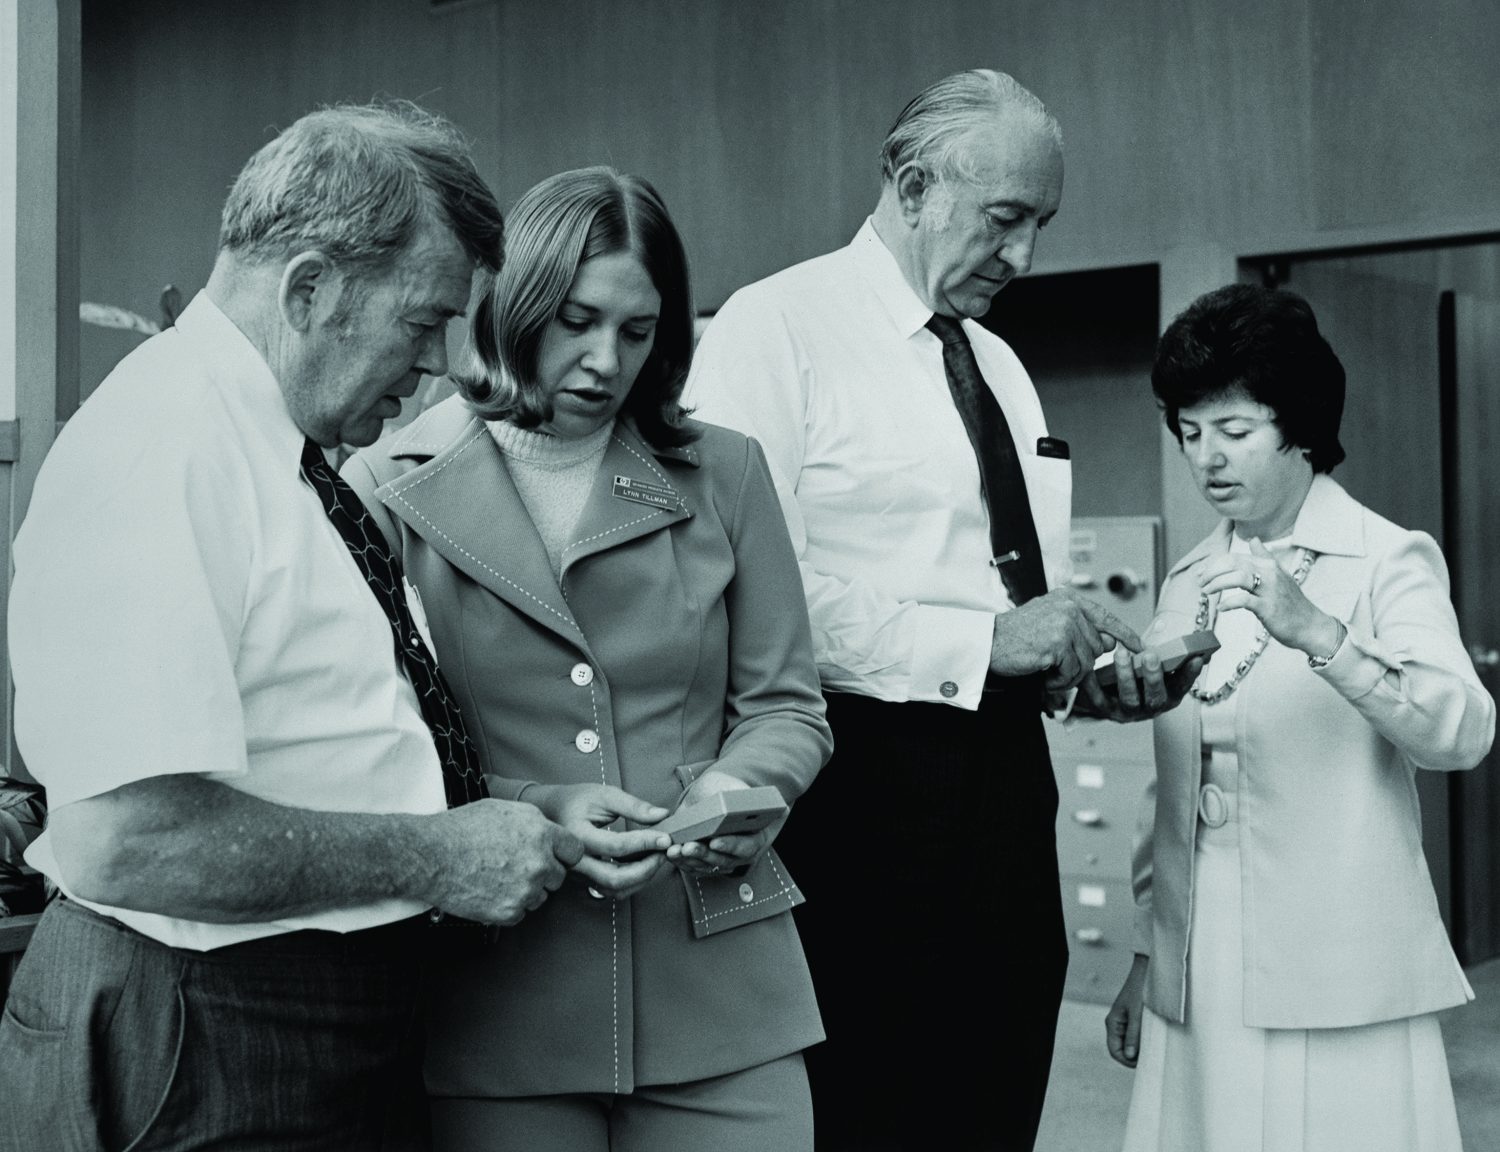 Lynn Tillman and Janet Loustanou giving Bill Hewlett and Dave Packard a tutorial on the HP 70 financial calculator.